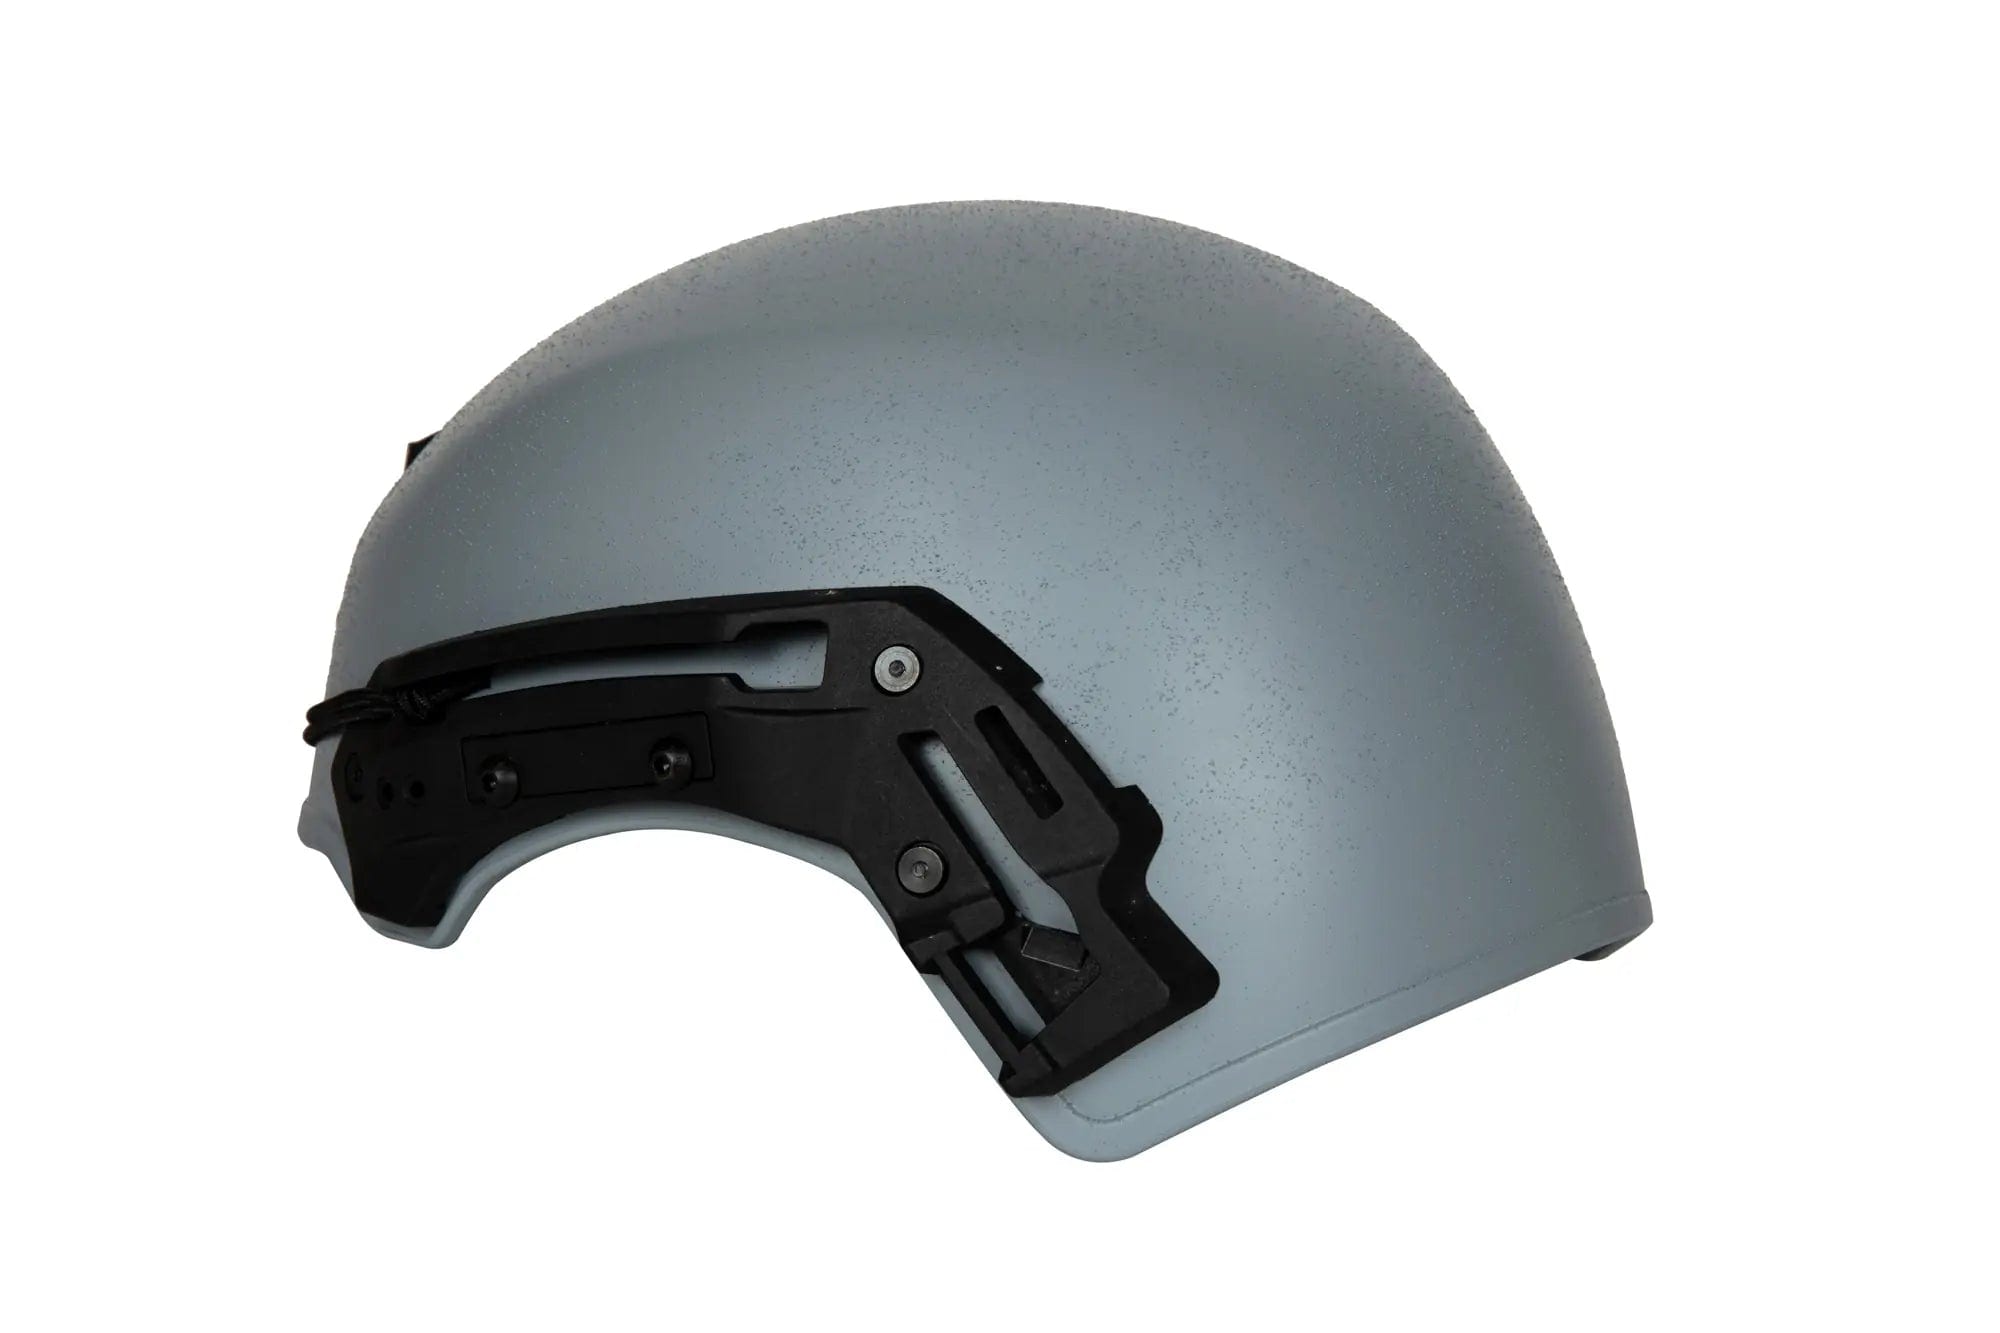 EXFIL helmet (L/XL) - Grey